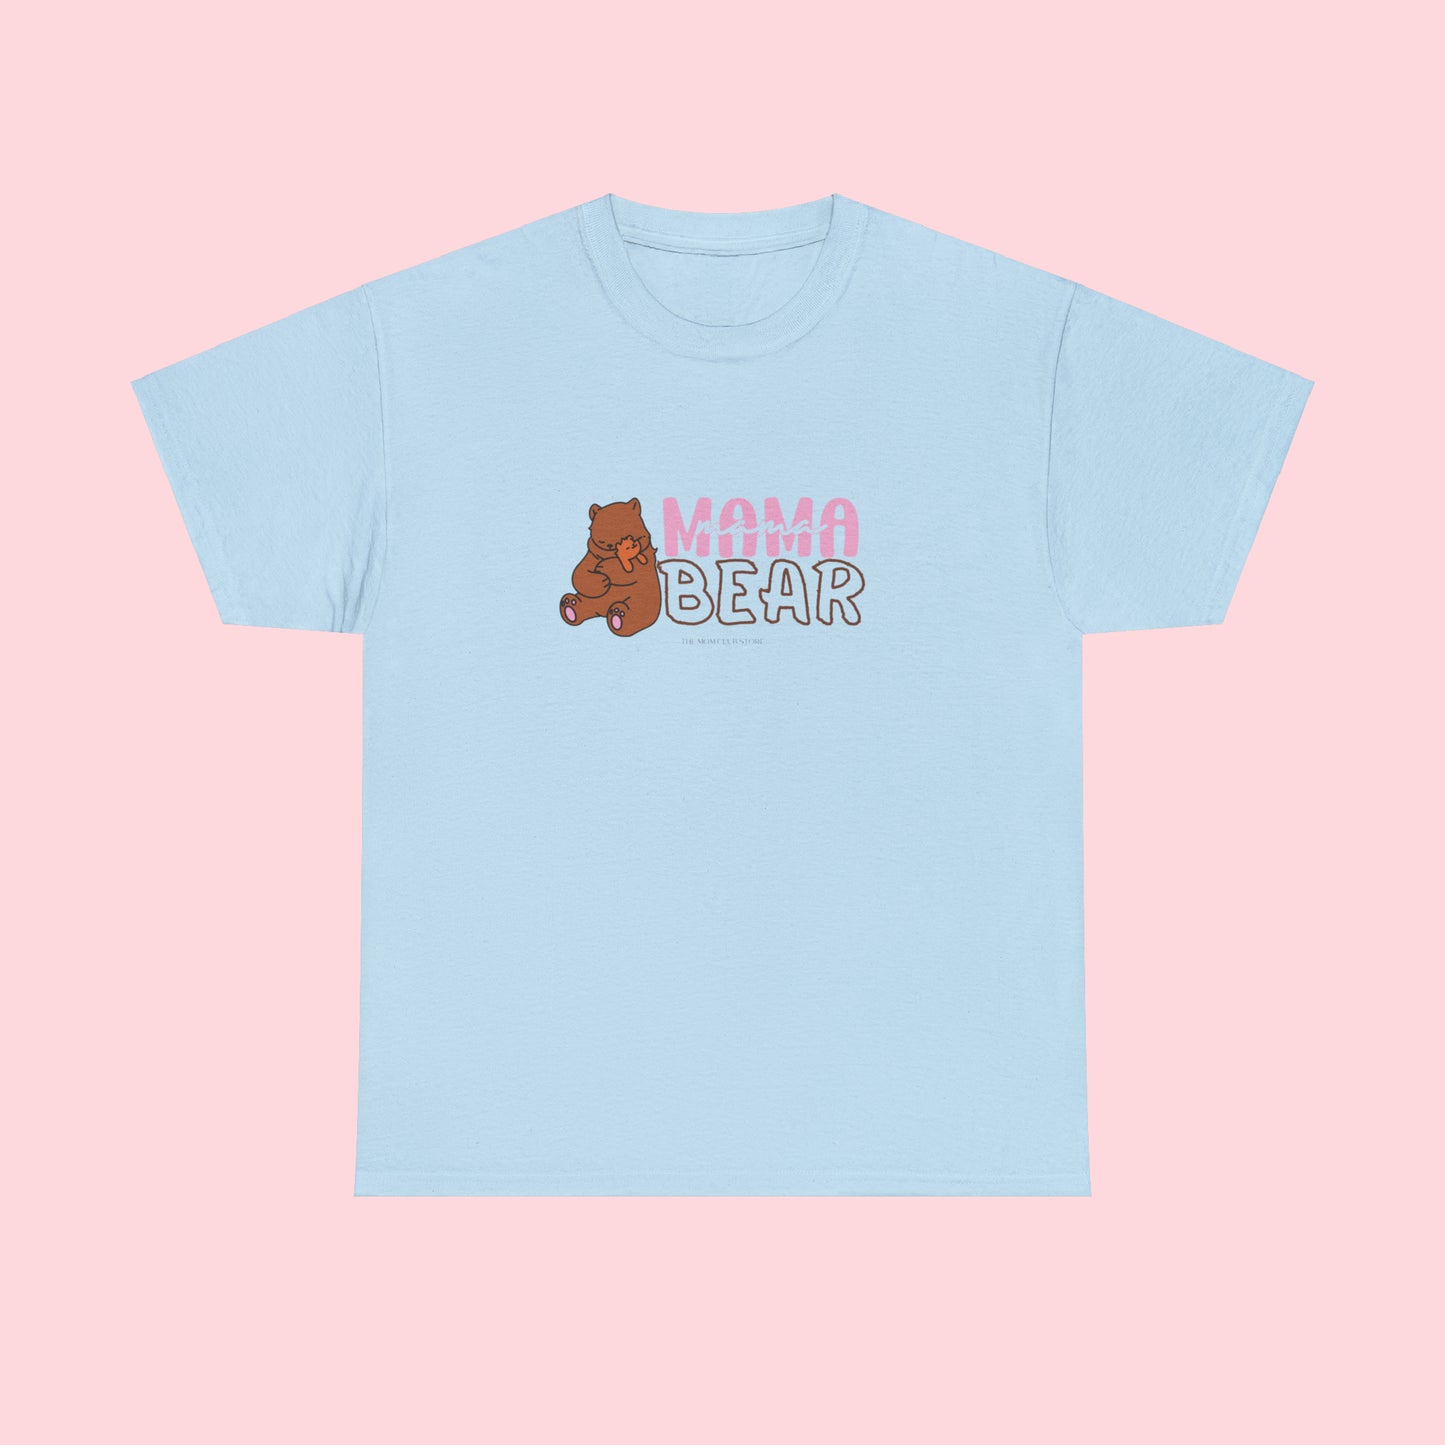 T-shirt MAMA BEAR